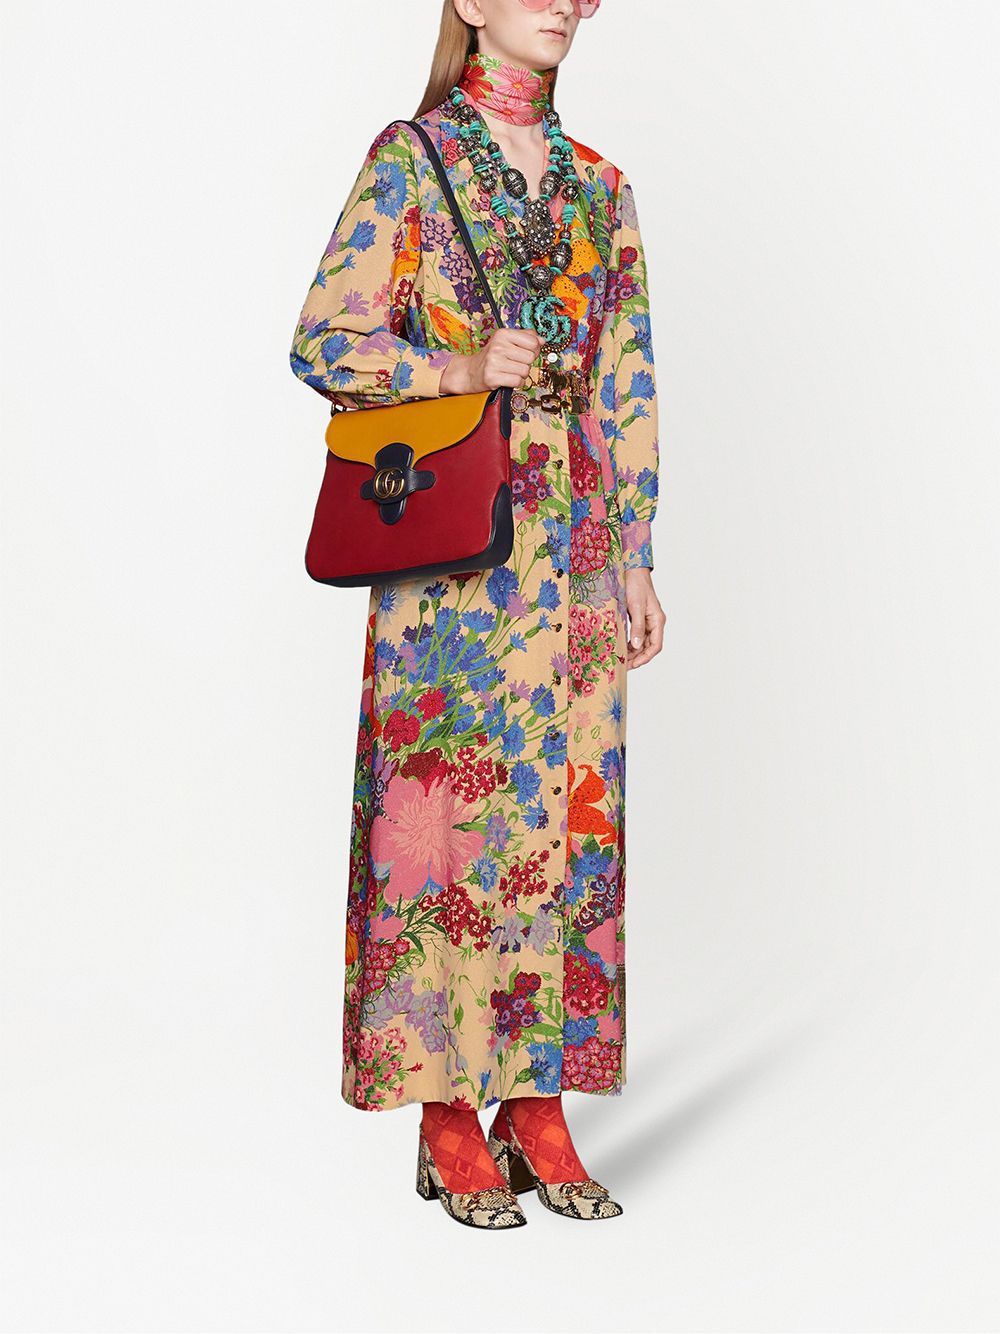 Gucci Ken Scott Floral Print Dress - Farfetch